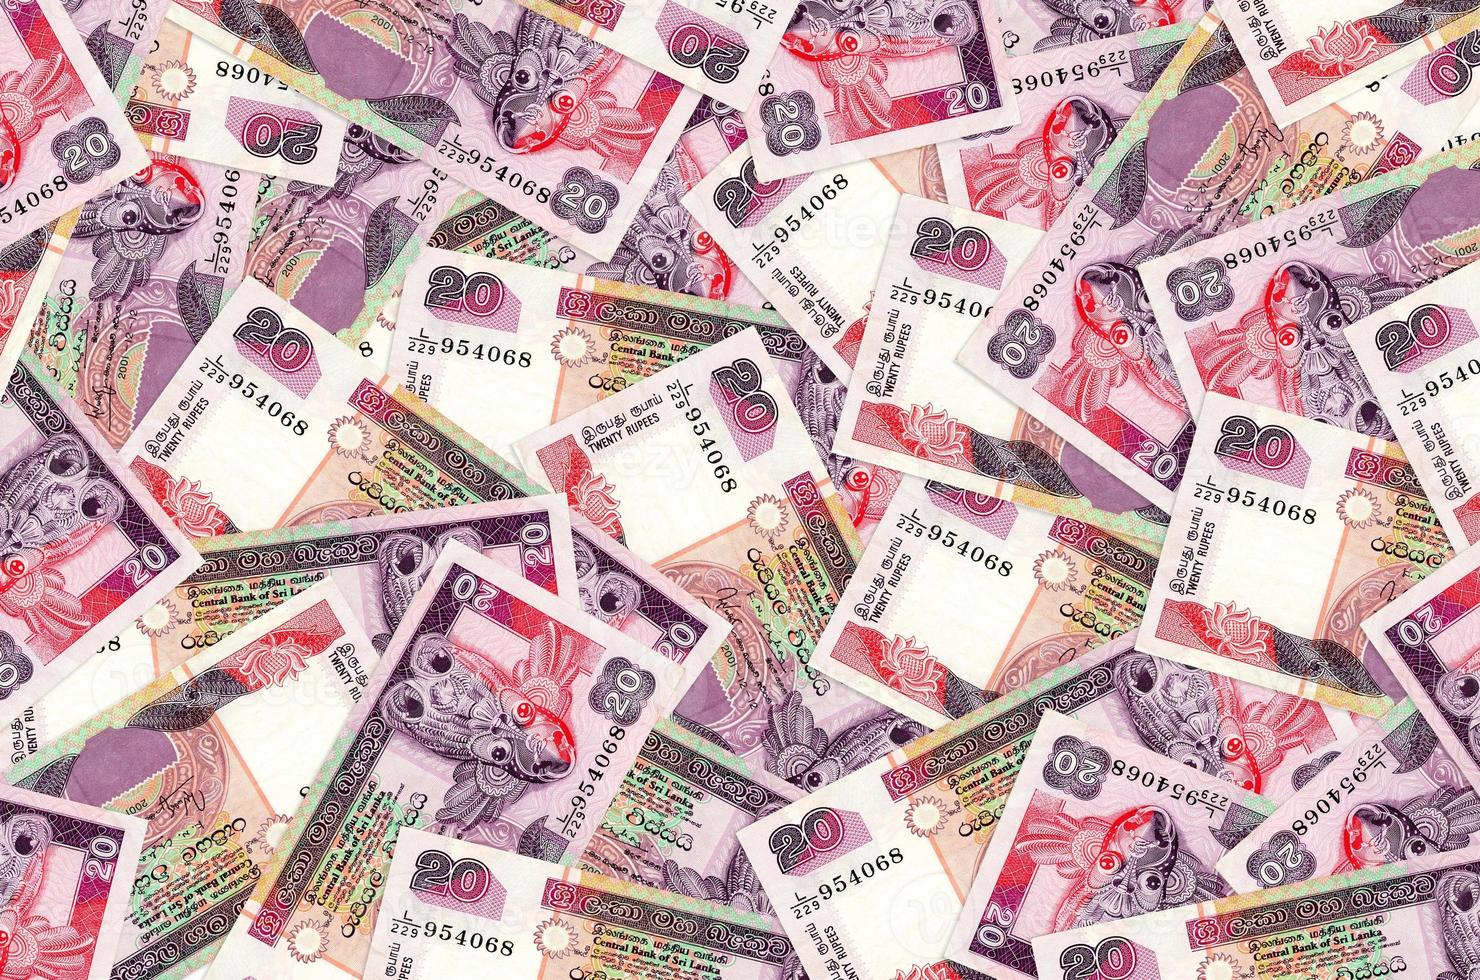 20 Sri Lankan rupees bills lies in big pile. Rich life conceptual background photo